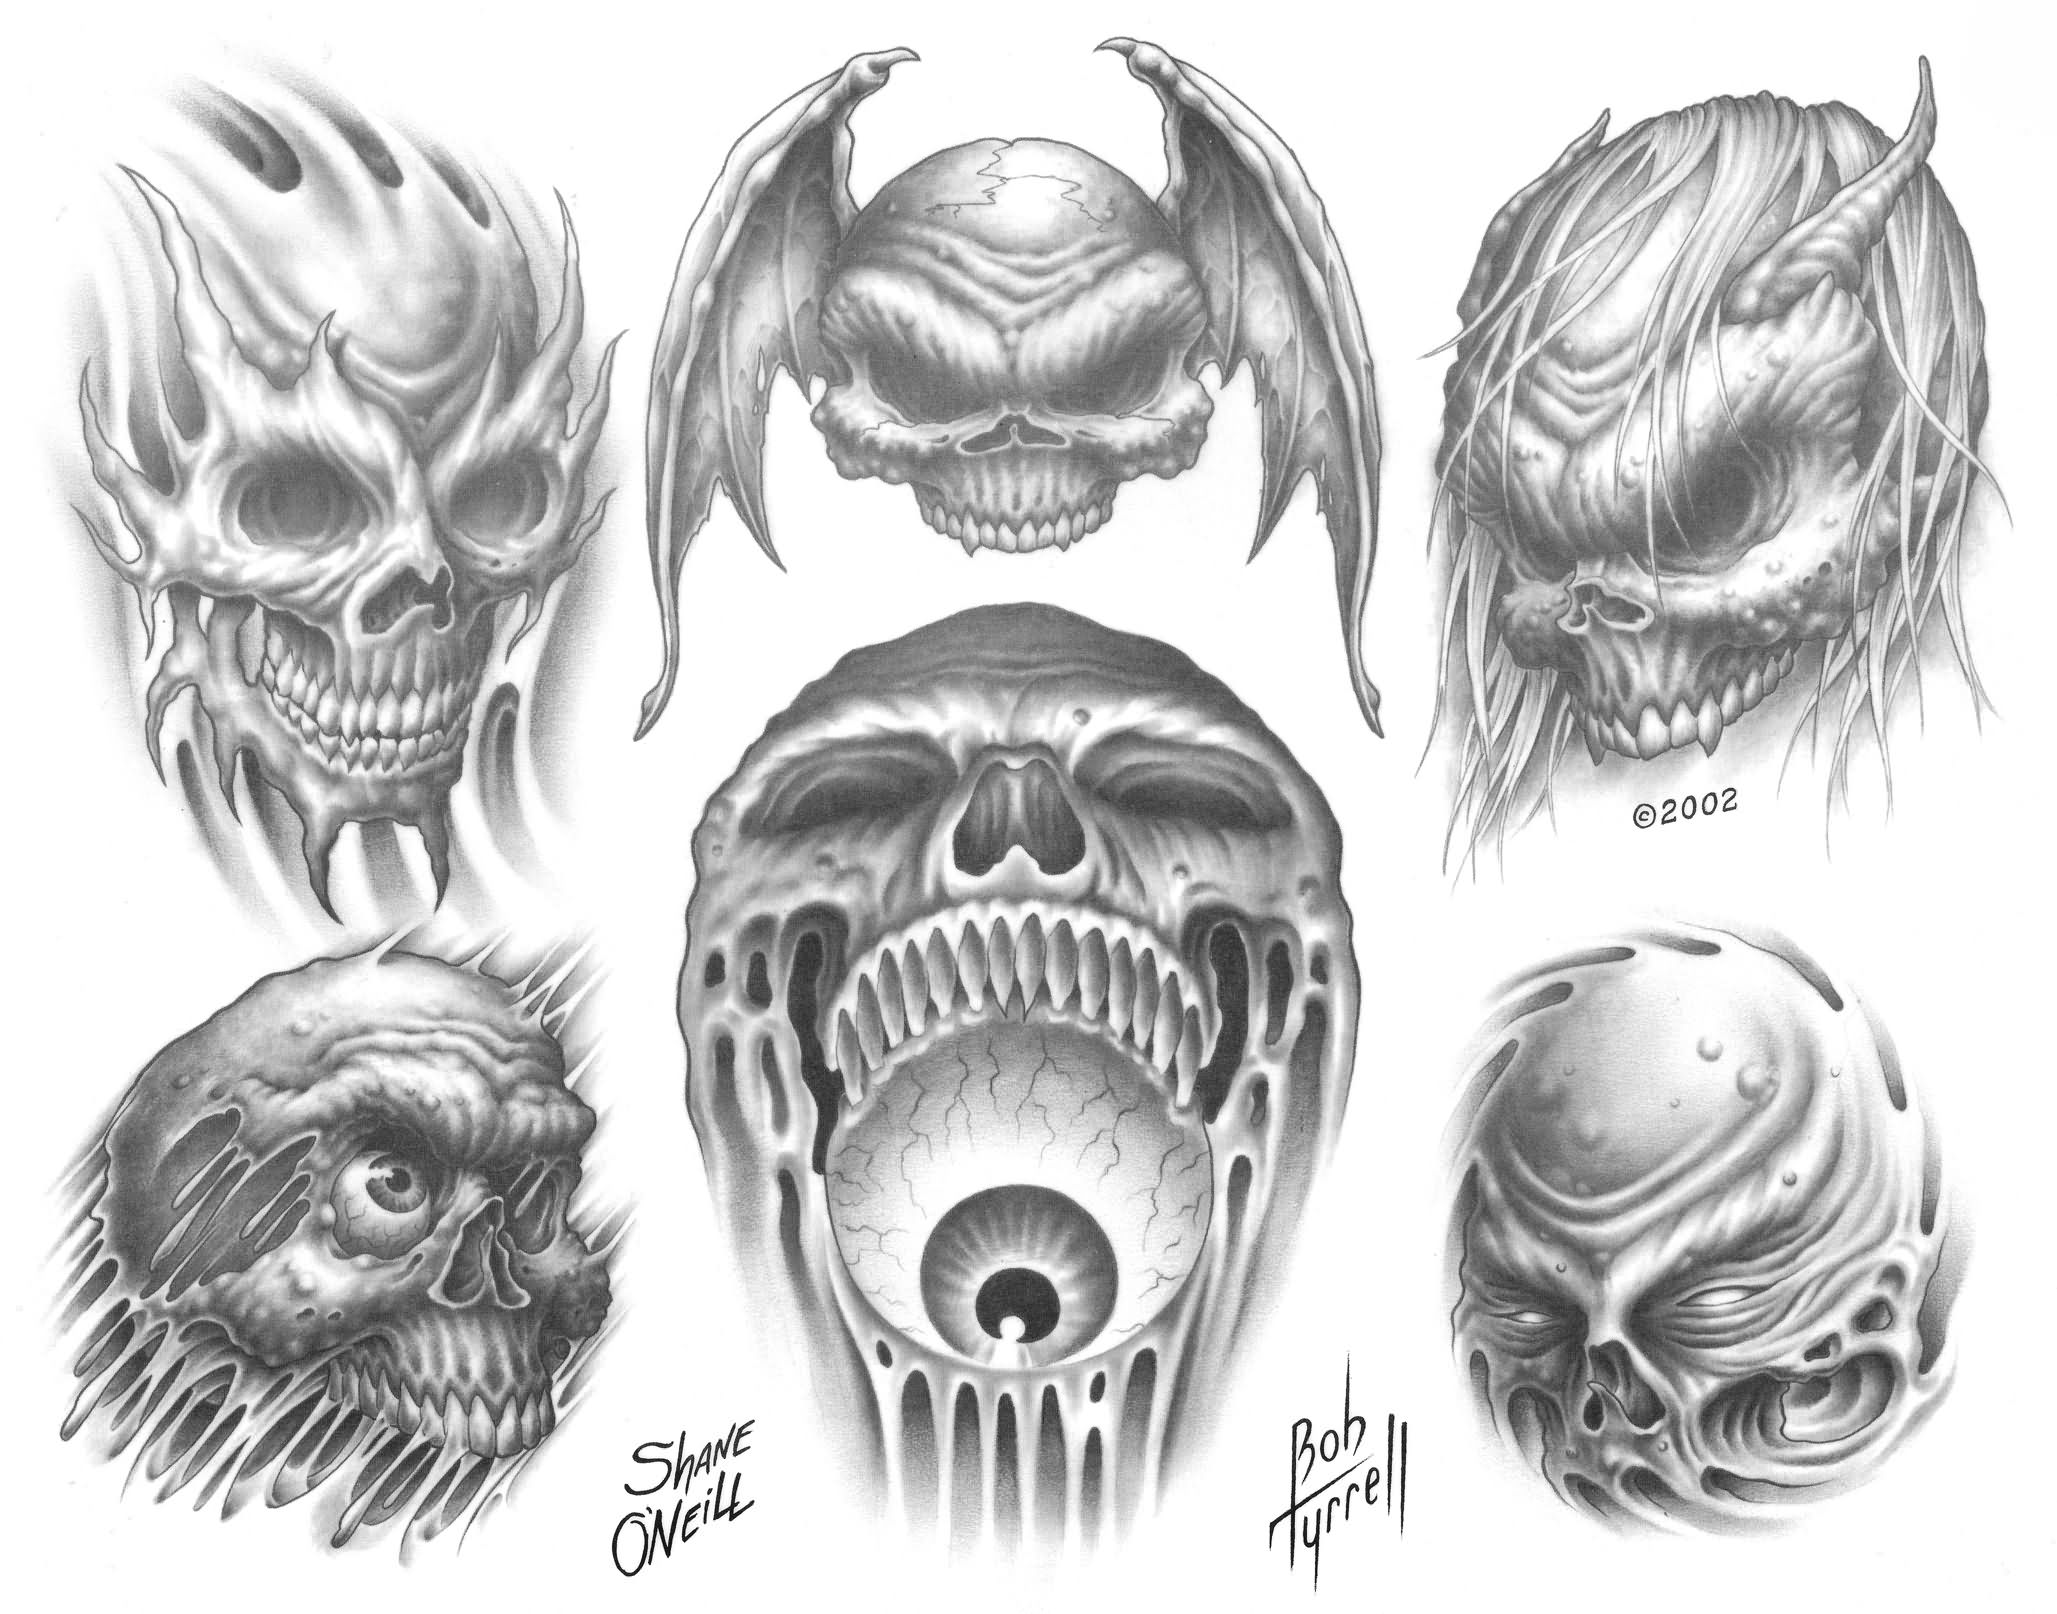 Grey Demonic Face Tattoo Designs by Shane Oneill & Bob Turrell